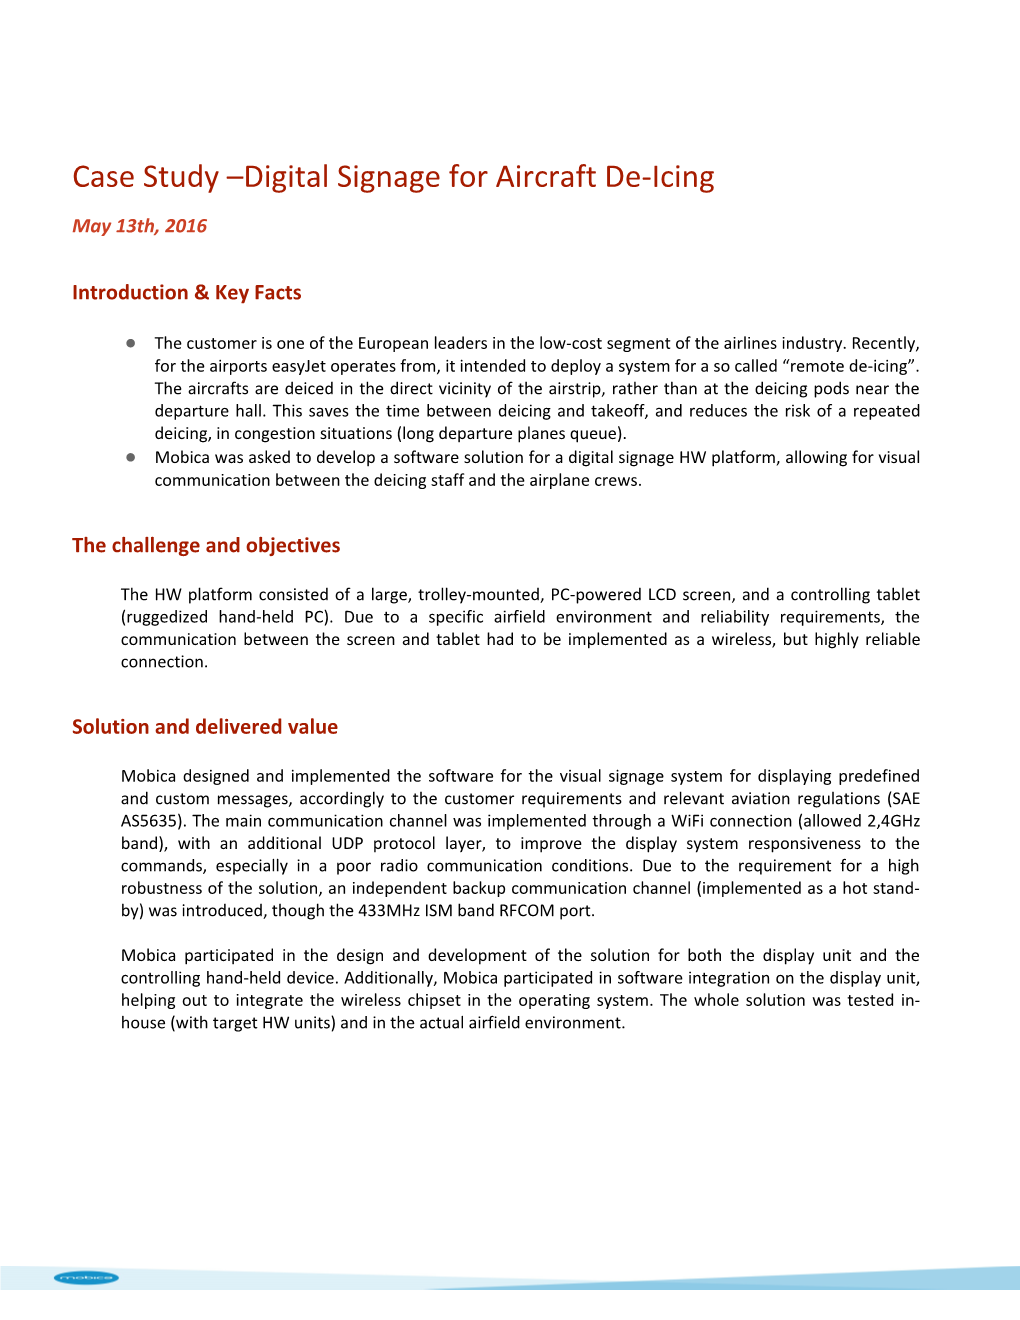 Case Study Digital Signage for Aircraft De-Icing